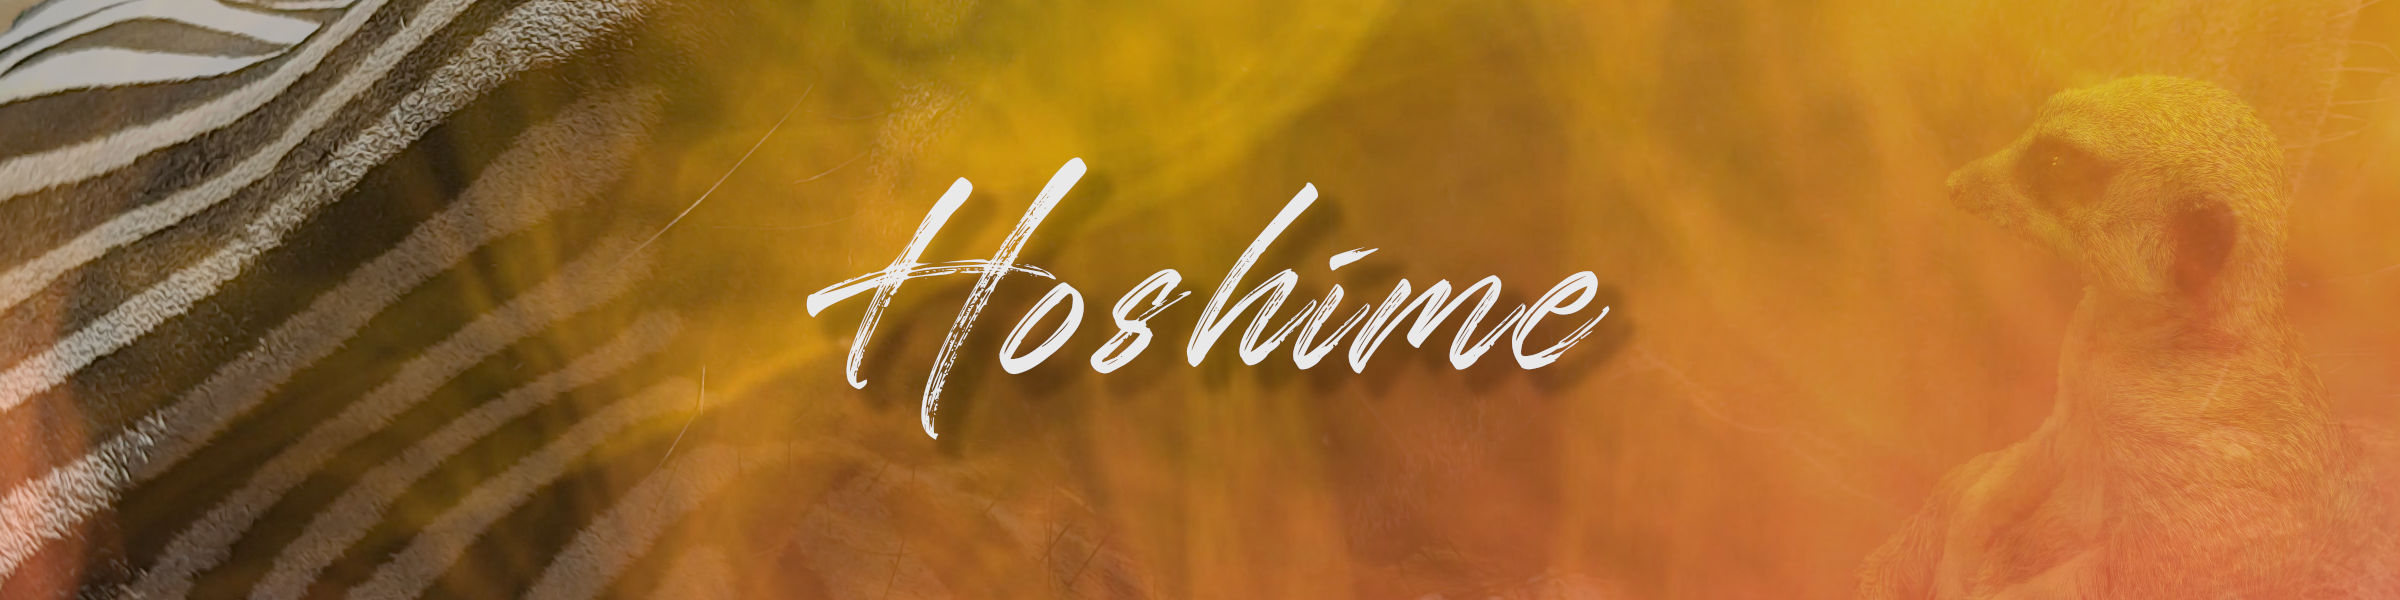 Hoshime banner